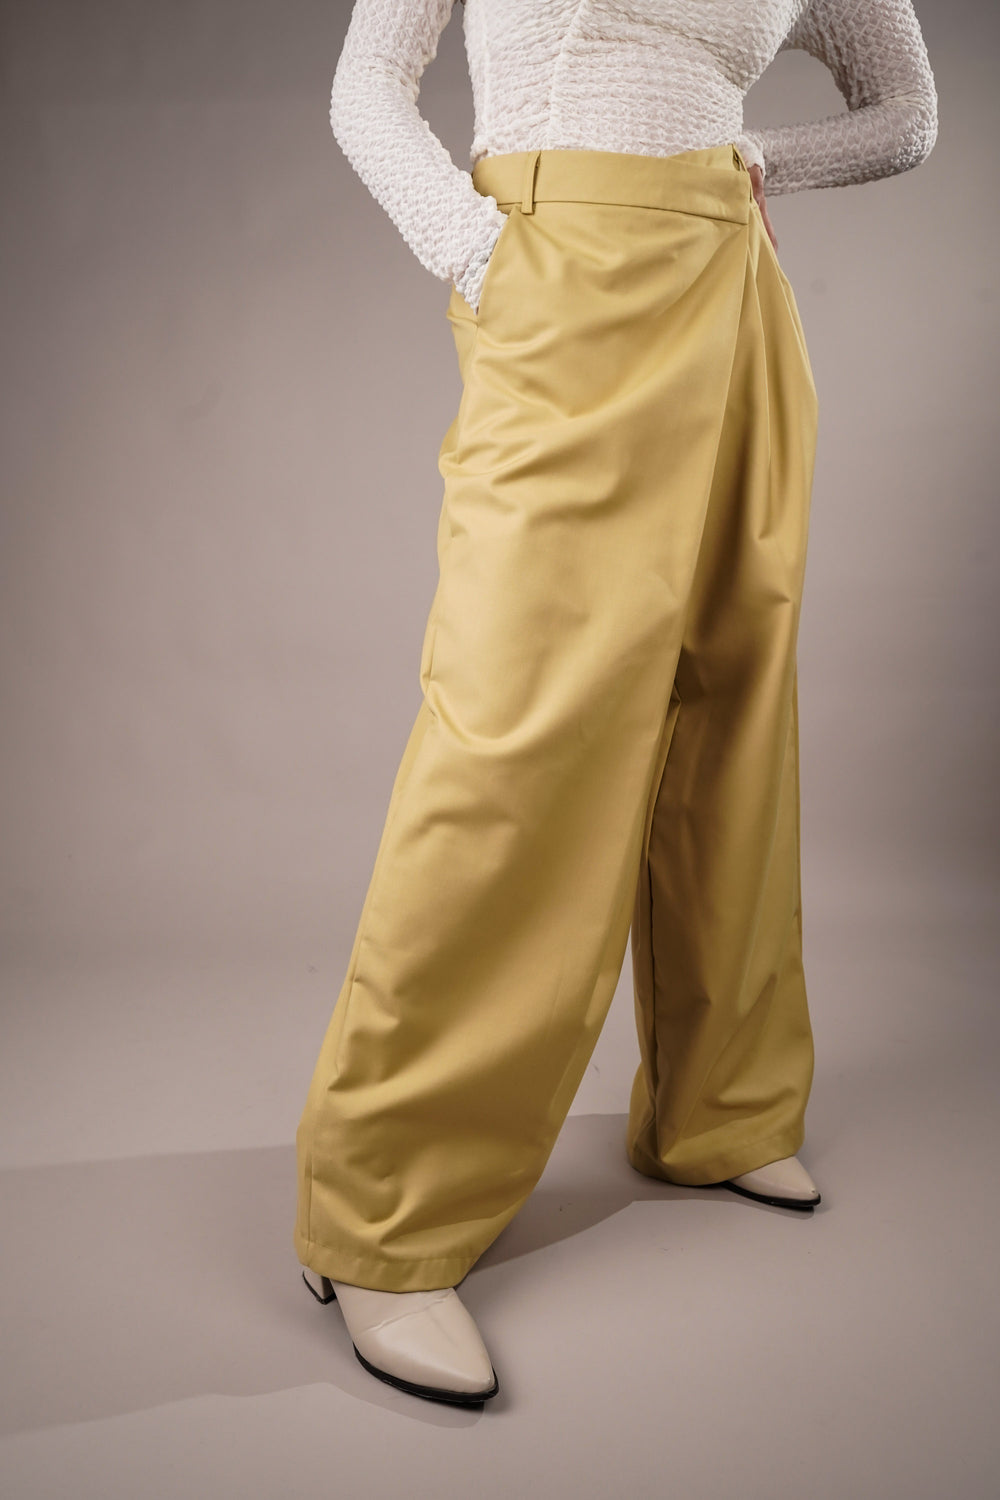 Trendy asymmetrical trousers for modern women